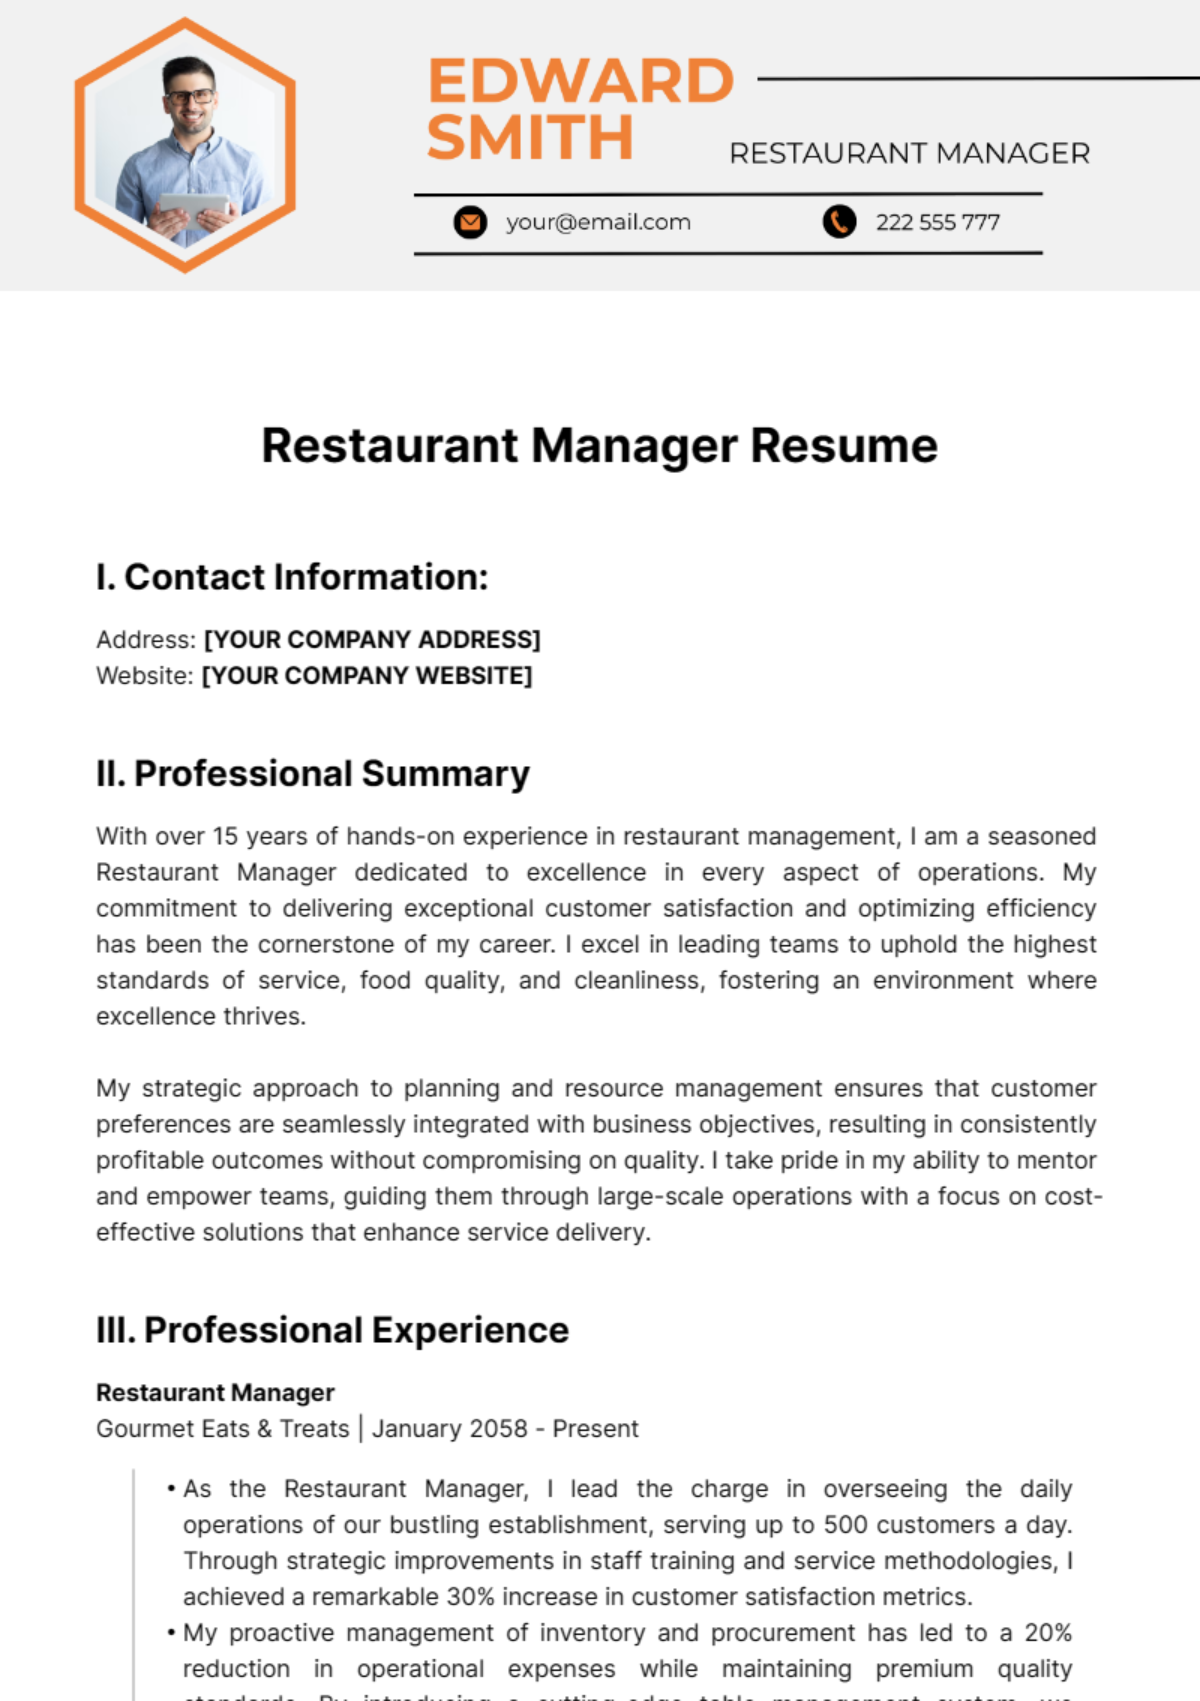 Restaurant Manager Resume Template